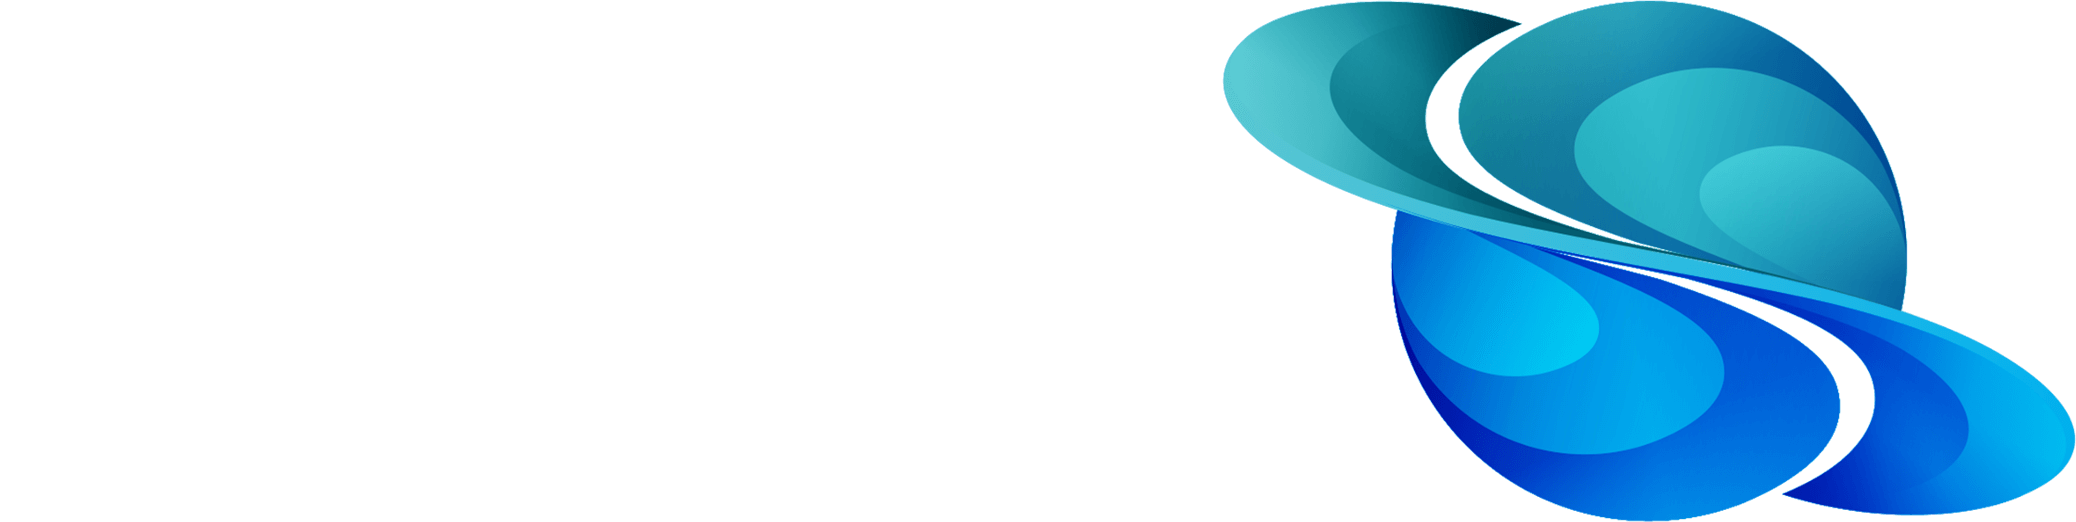 smartup-header-logo